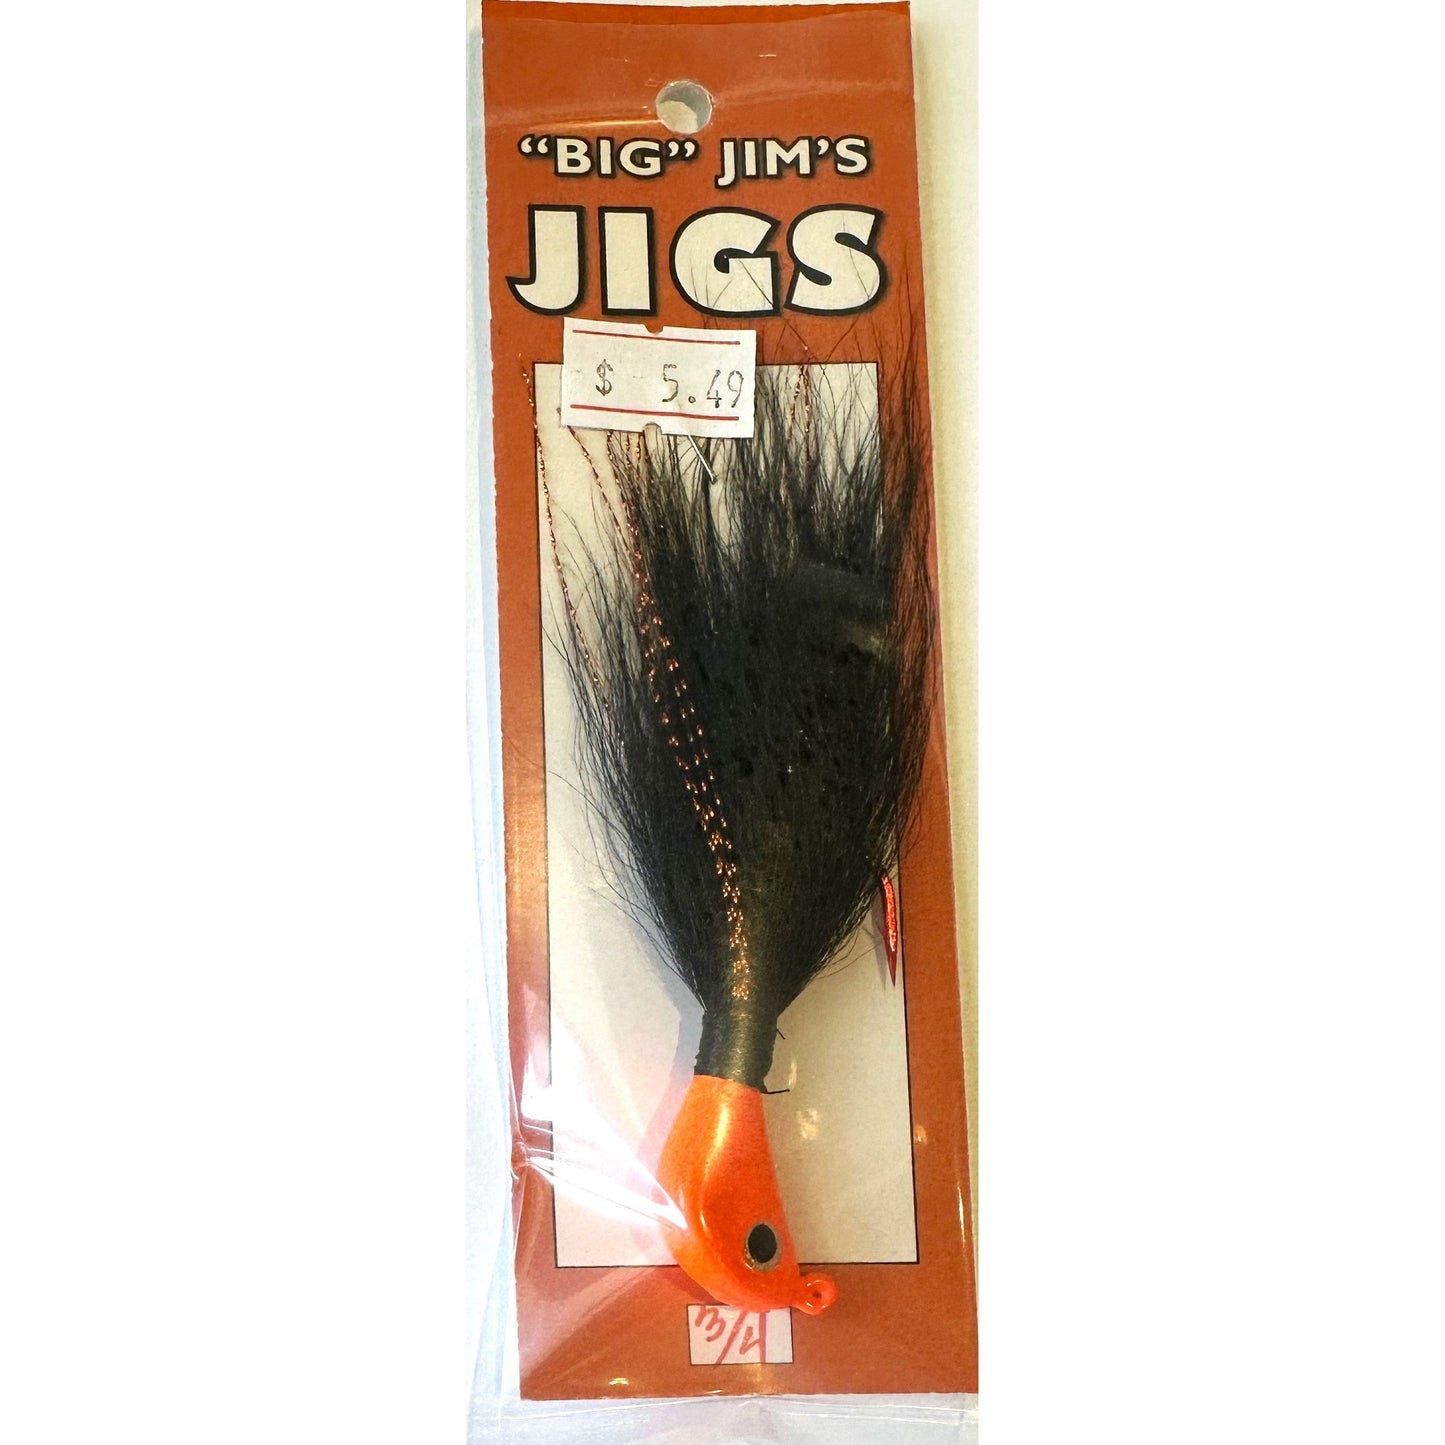 Big Jim's Hair Jig